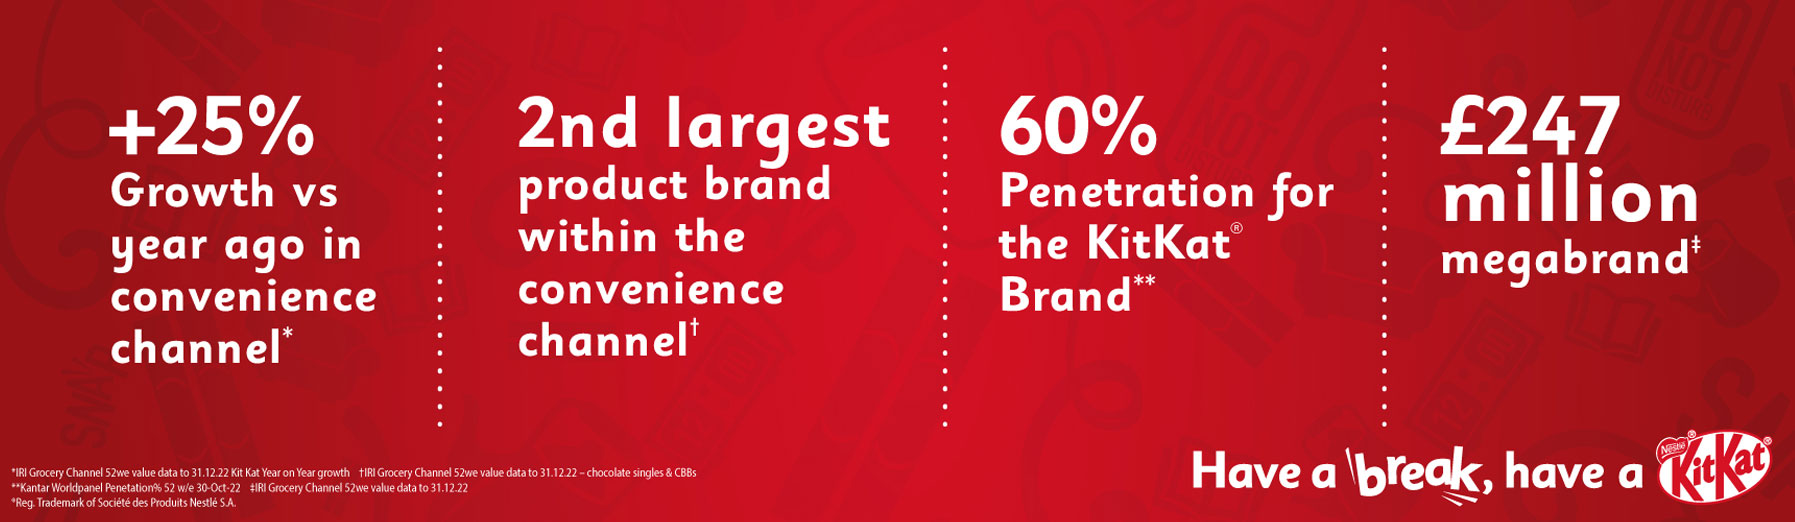 Kit Kat sales statistics